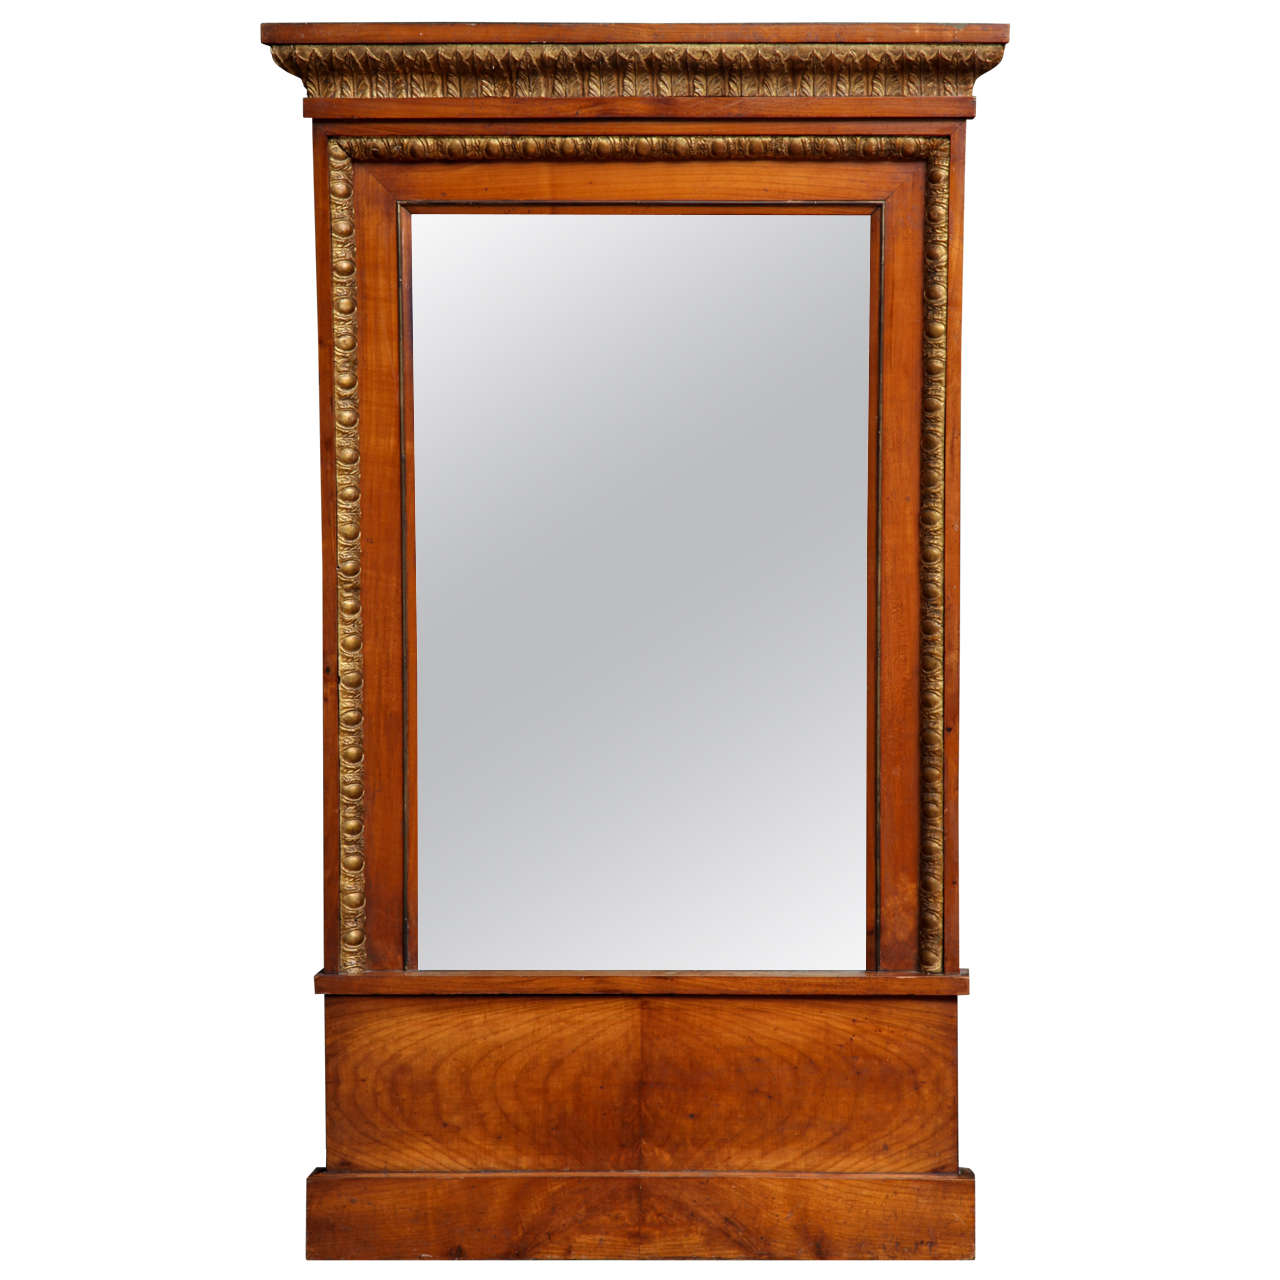 A 19th Century German Neoclassic Cherrywood Mirror